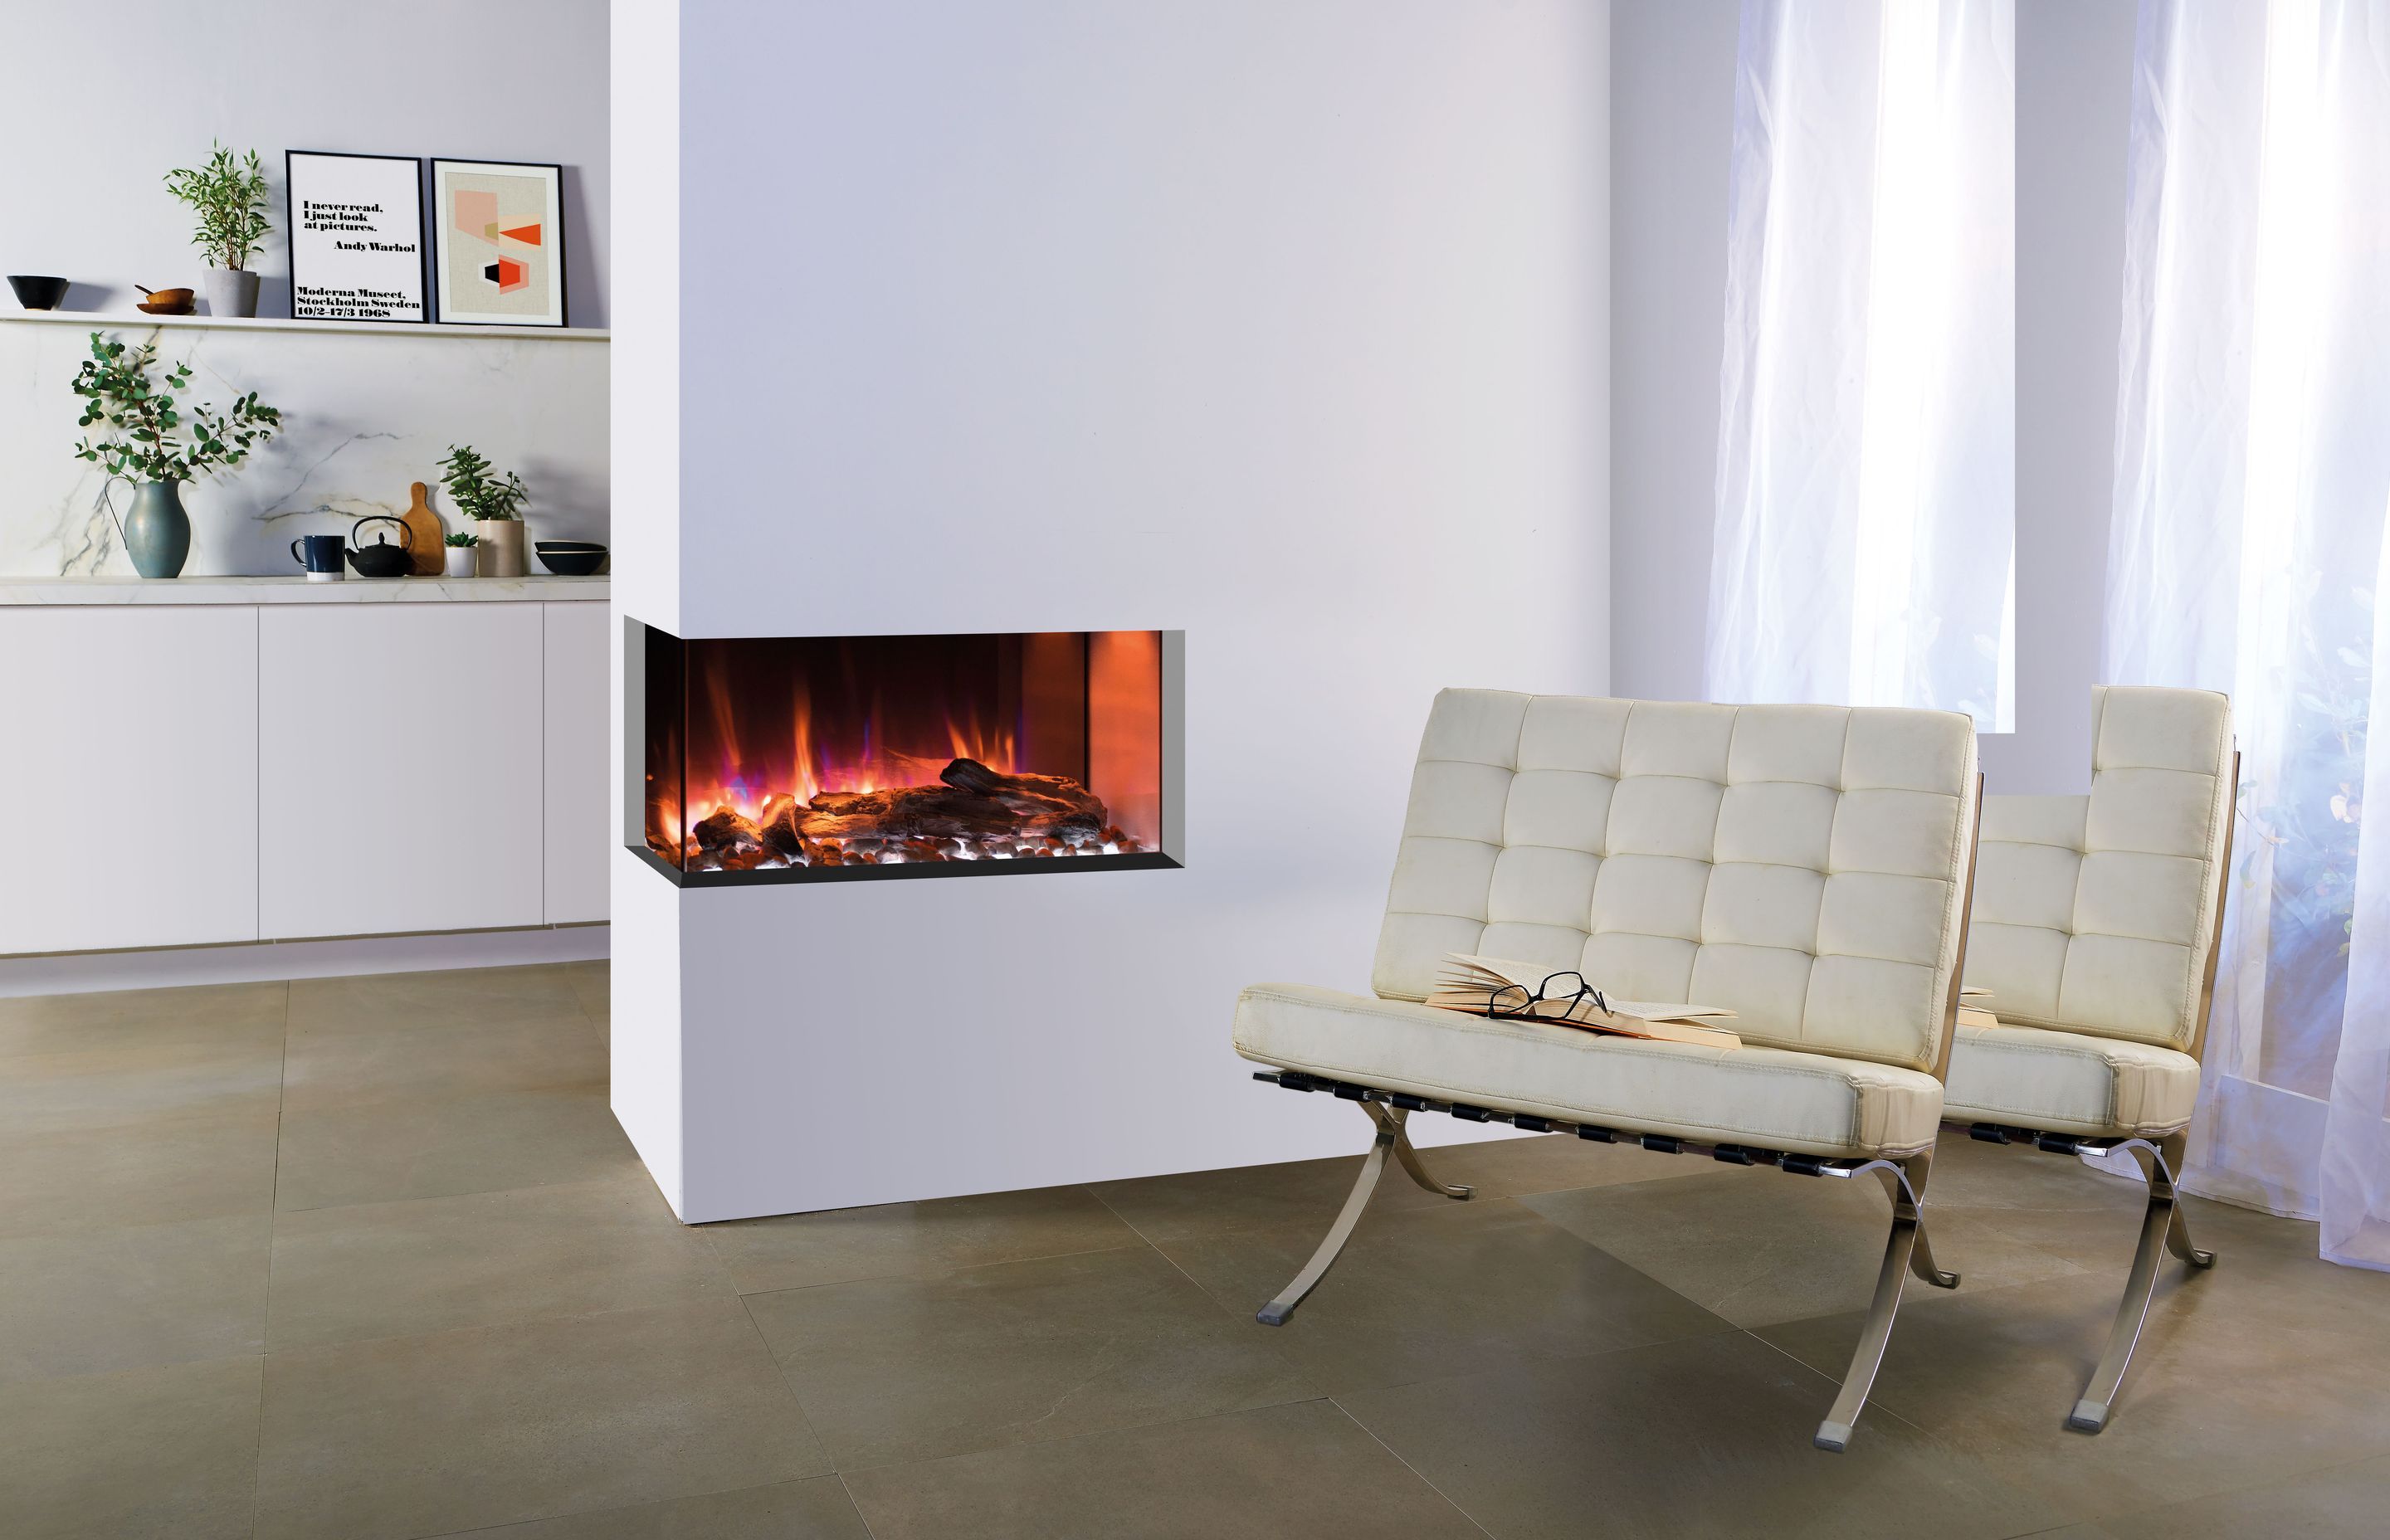 The Gazco e-Reflex electric fireplace.